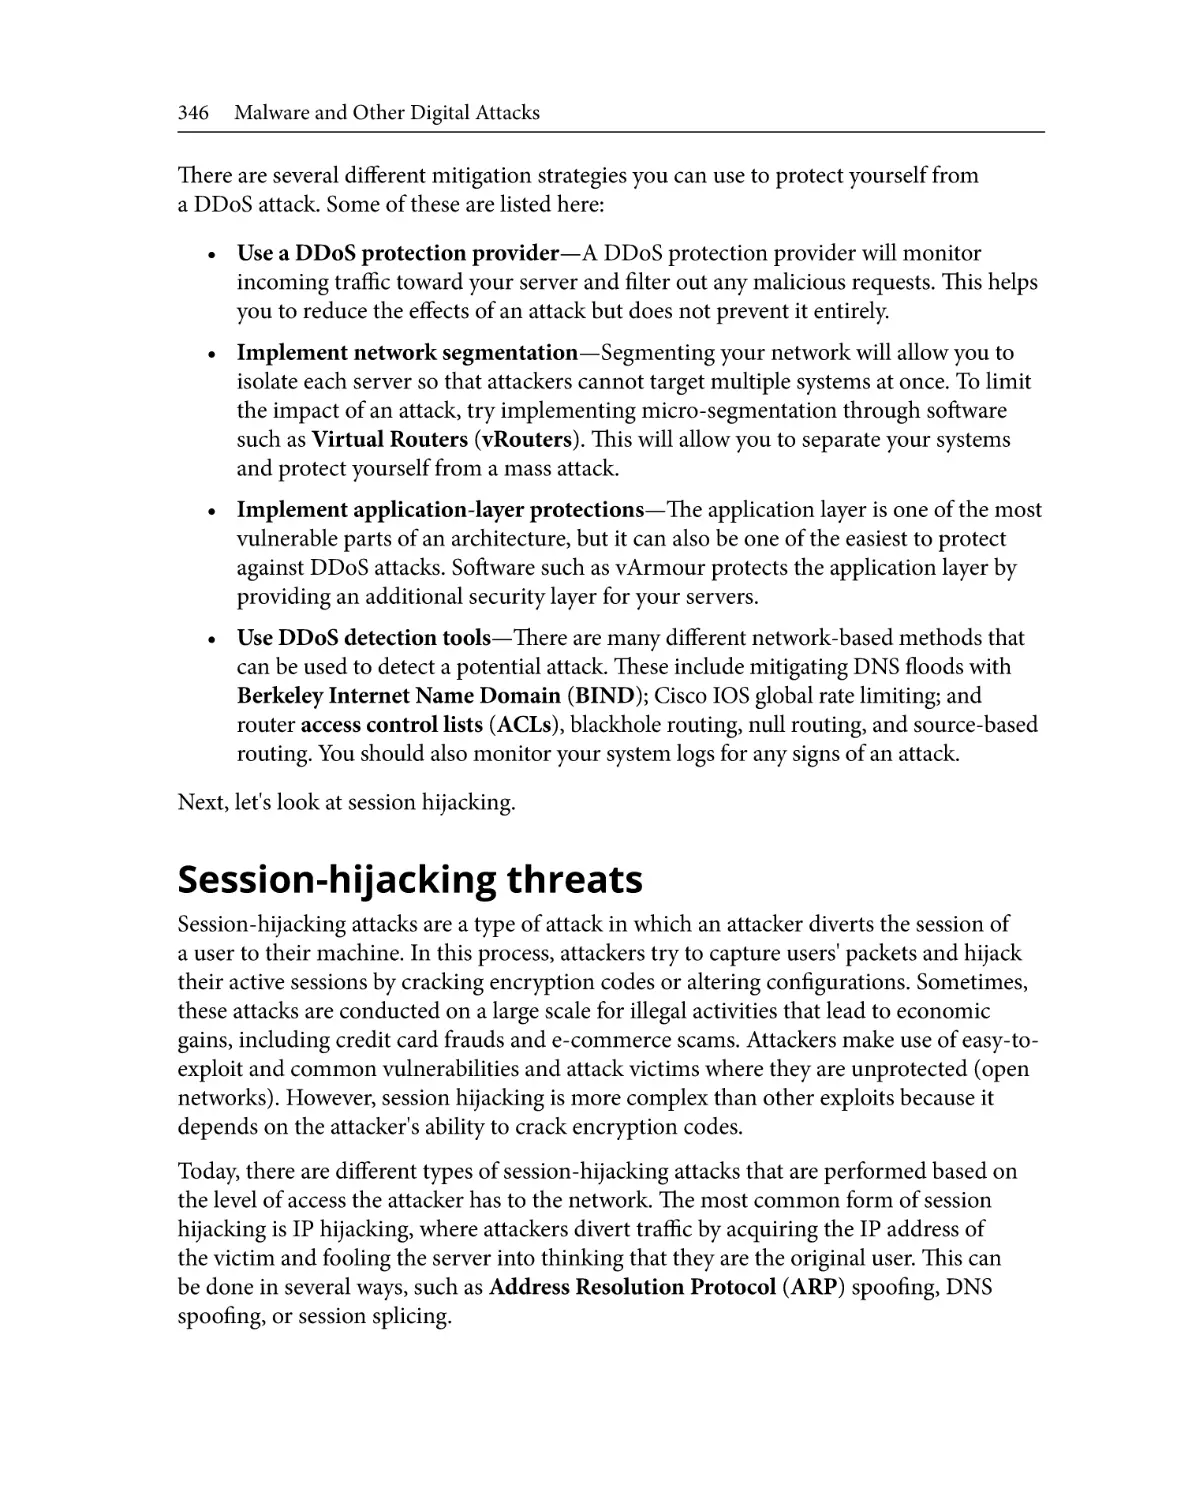 Session-hijacking threats